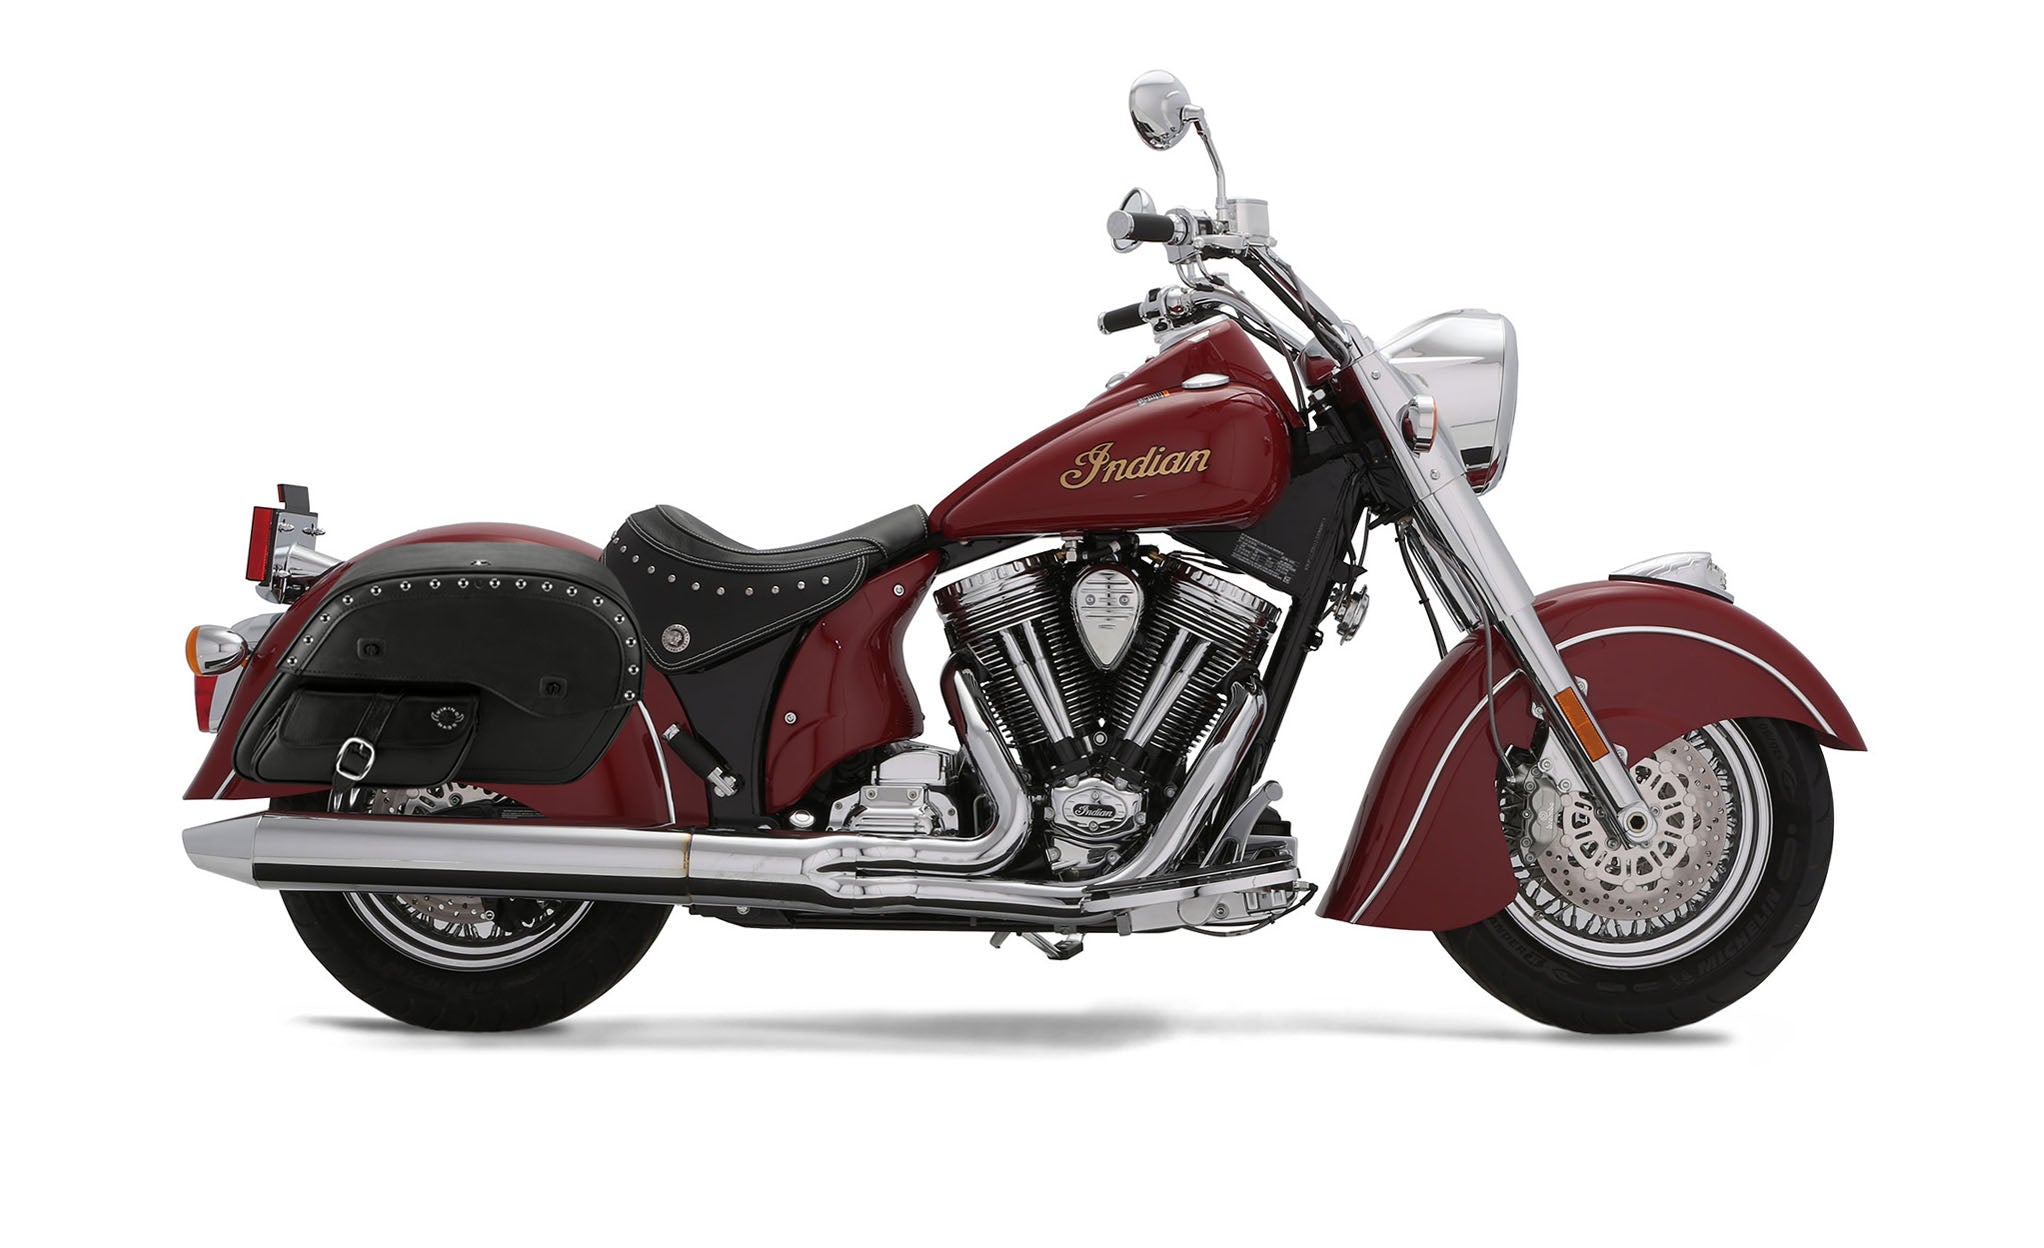 Viking Side Pocket Large Studded Indian Chief Deluxe Leather Motorcycle Saddlebags on Bike Photo @expand